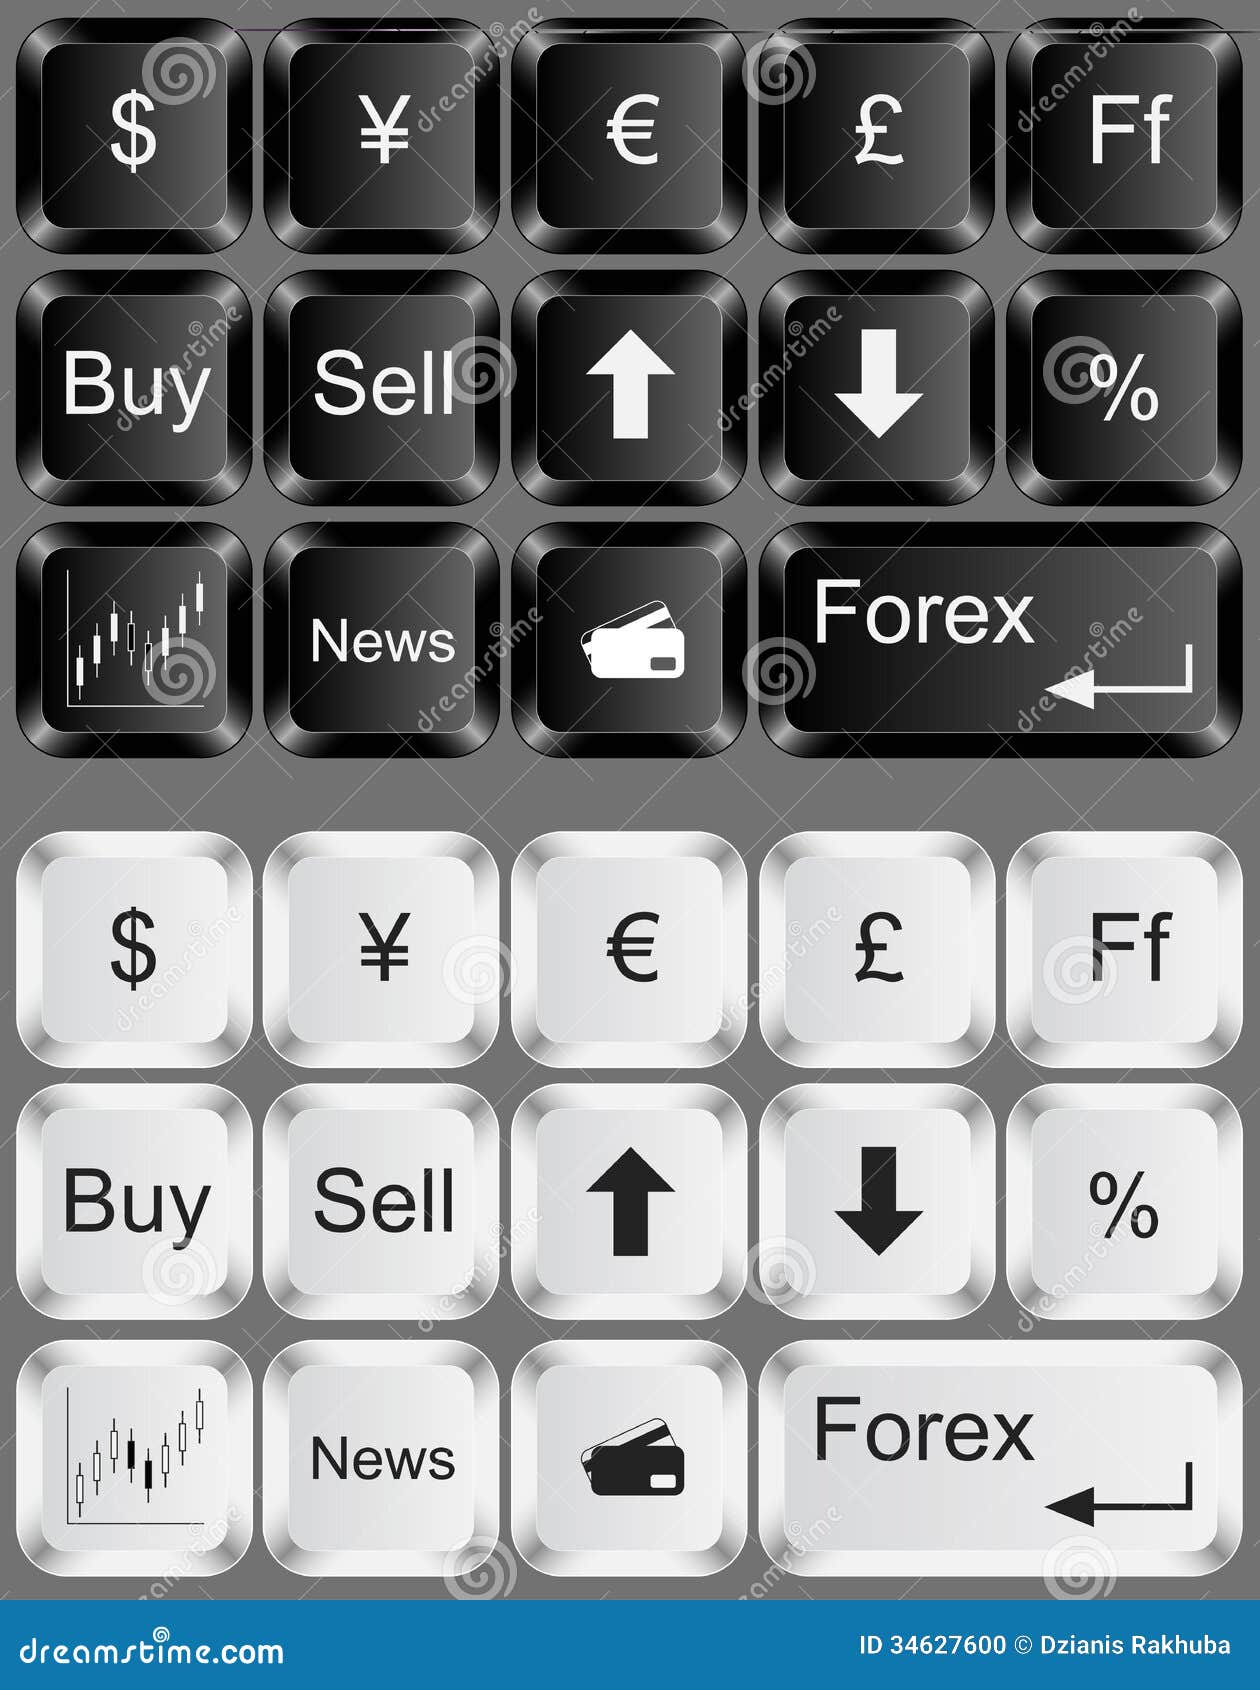 forex keyboard